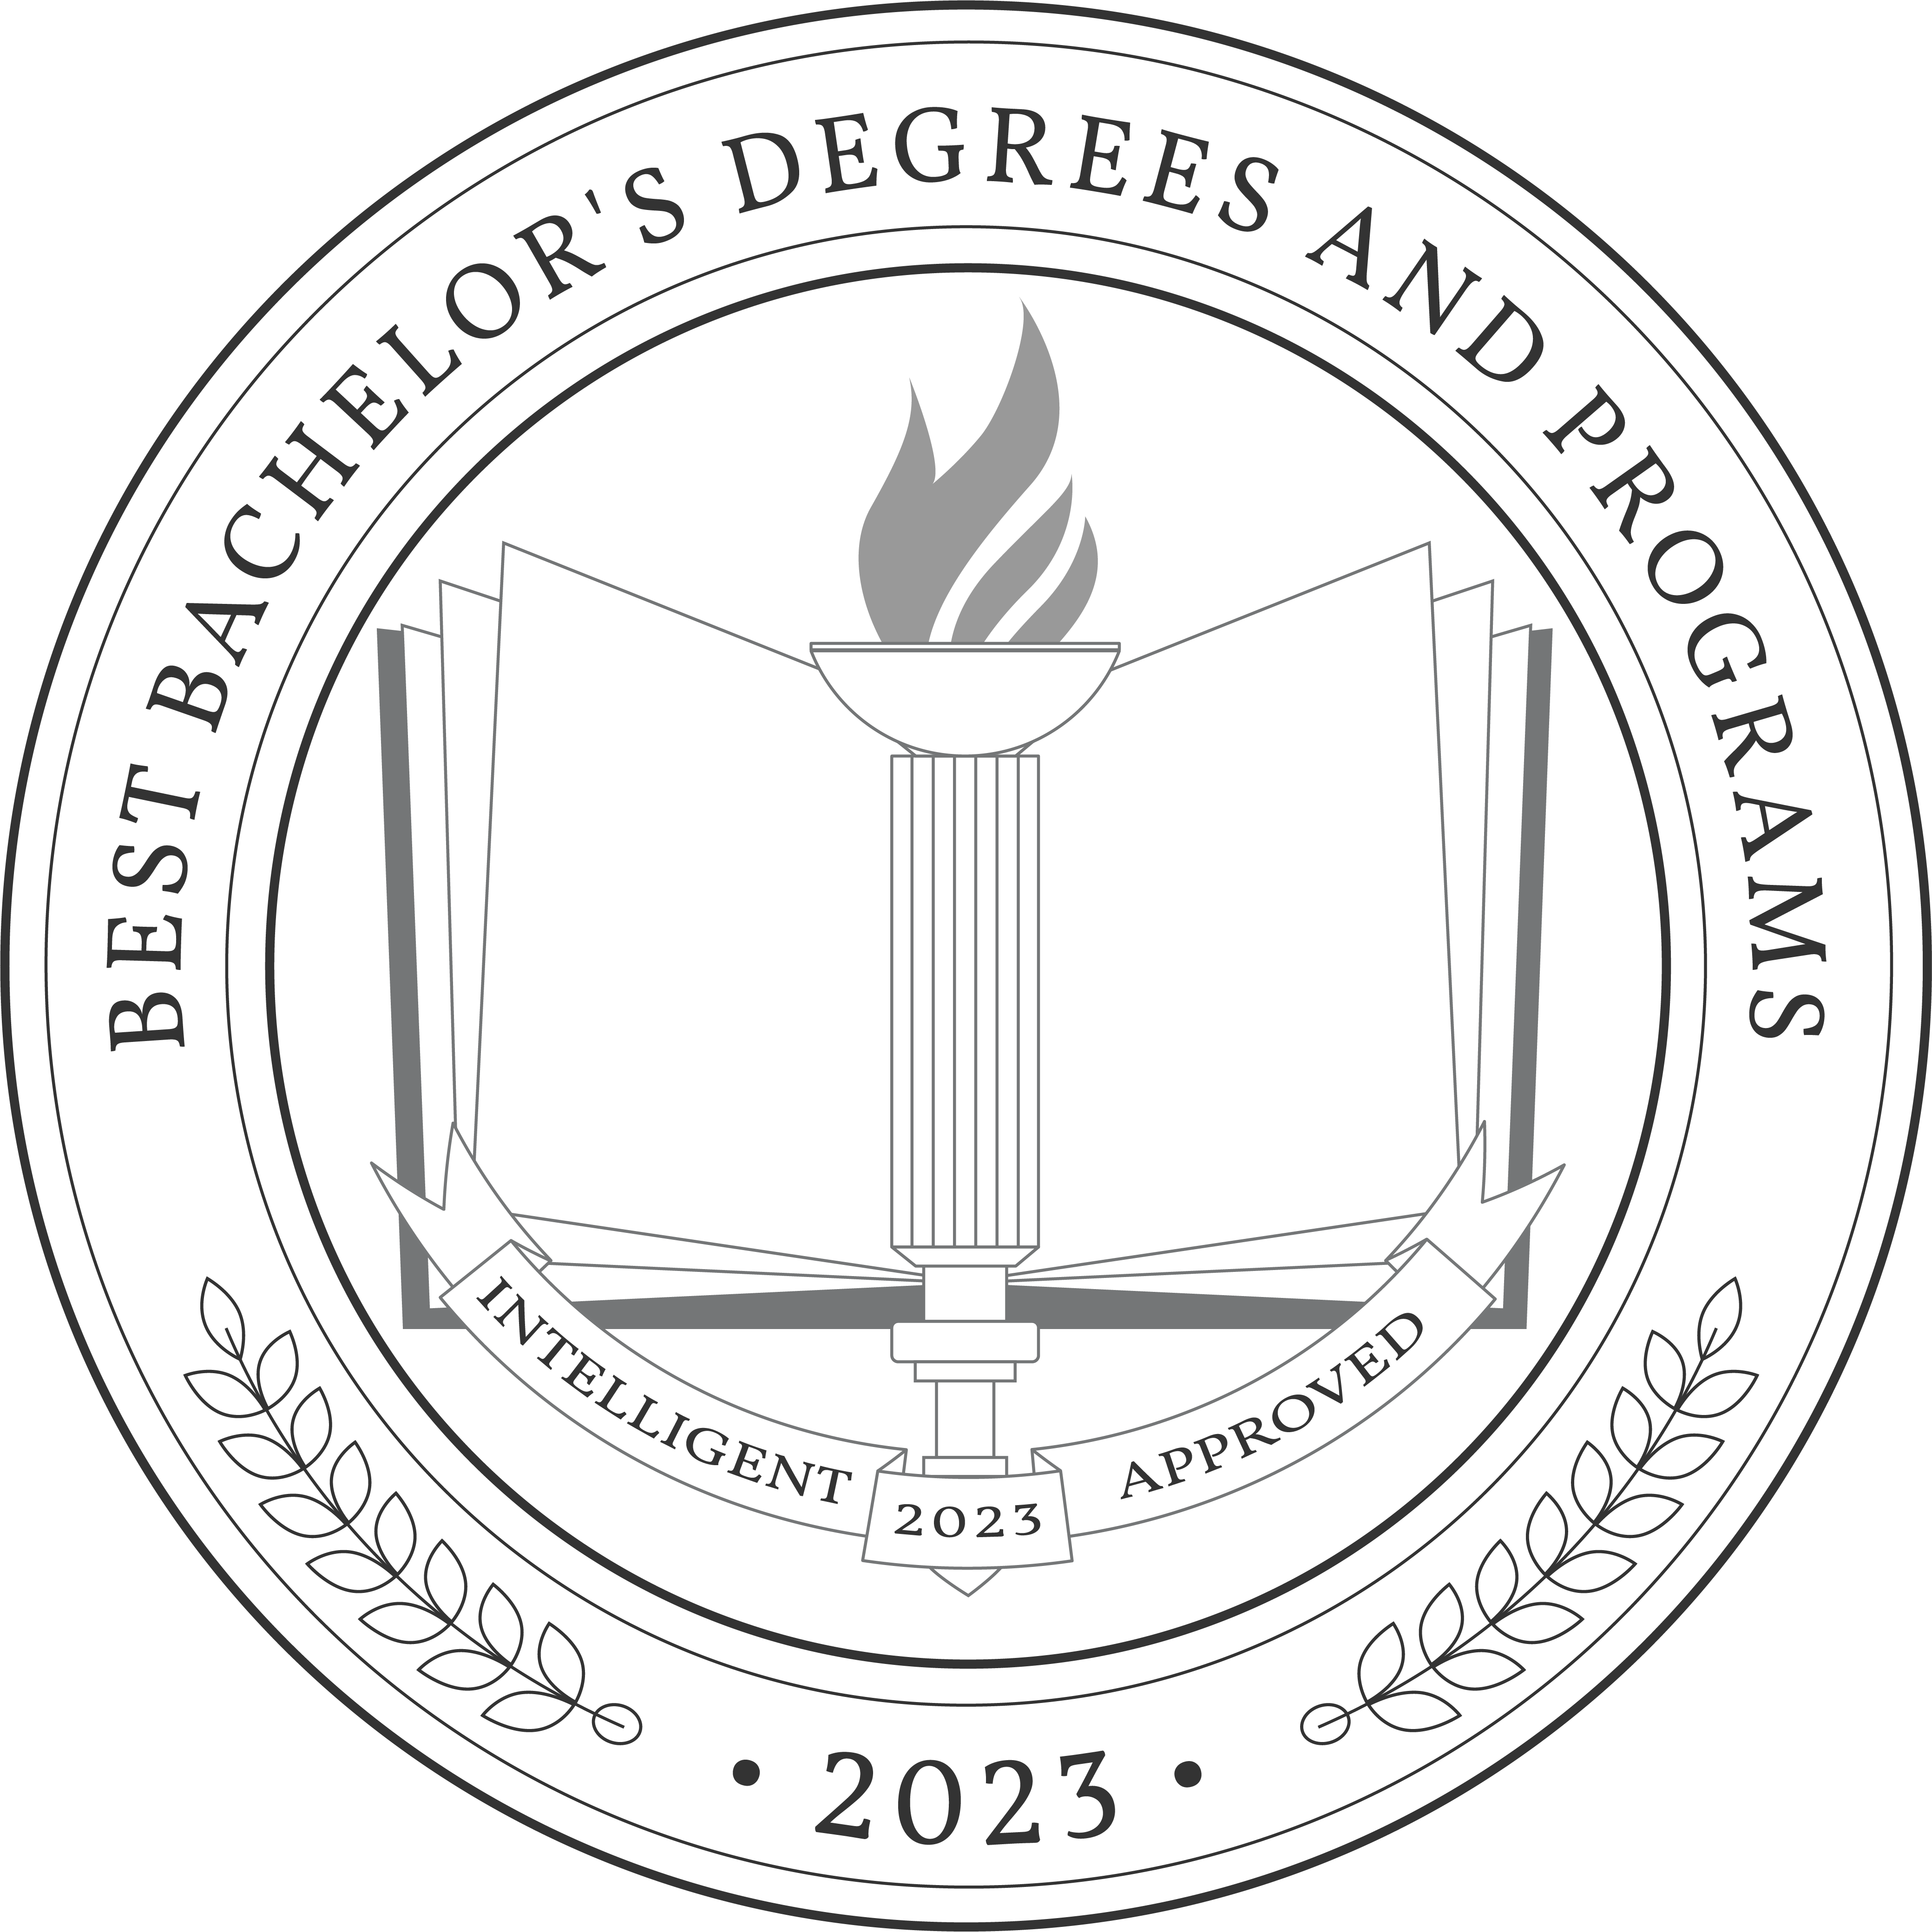 Best Bachelor's Degrees and Programs 2023 Badge